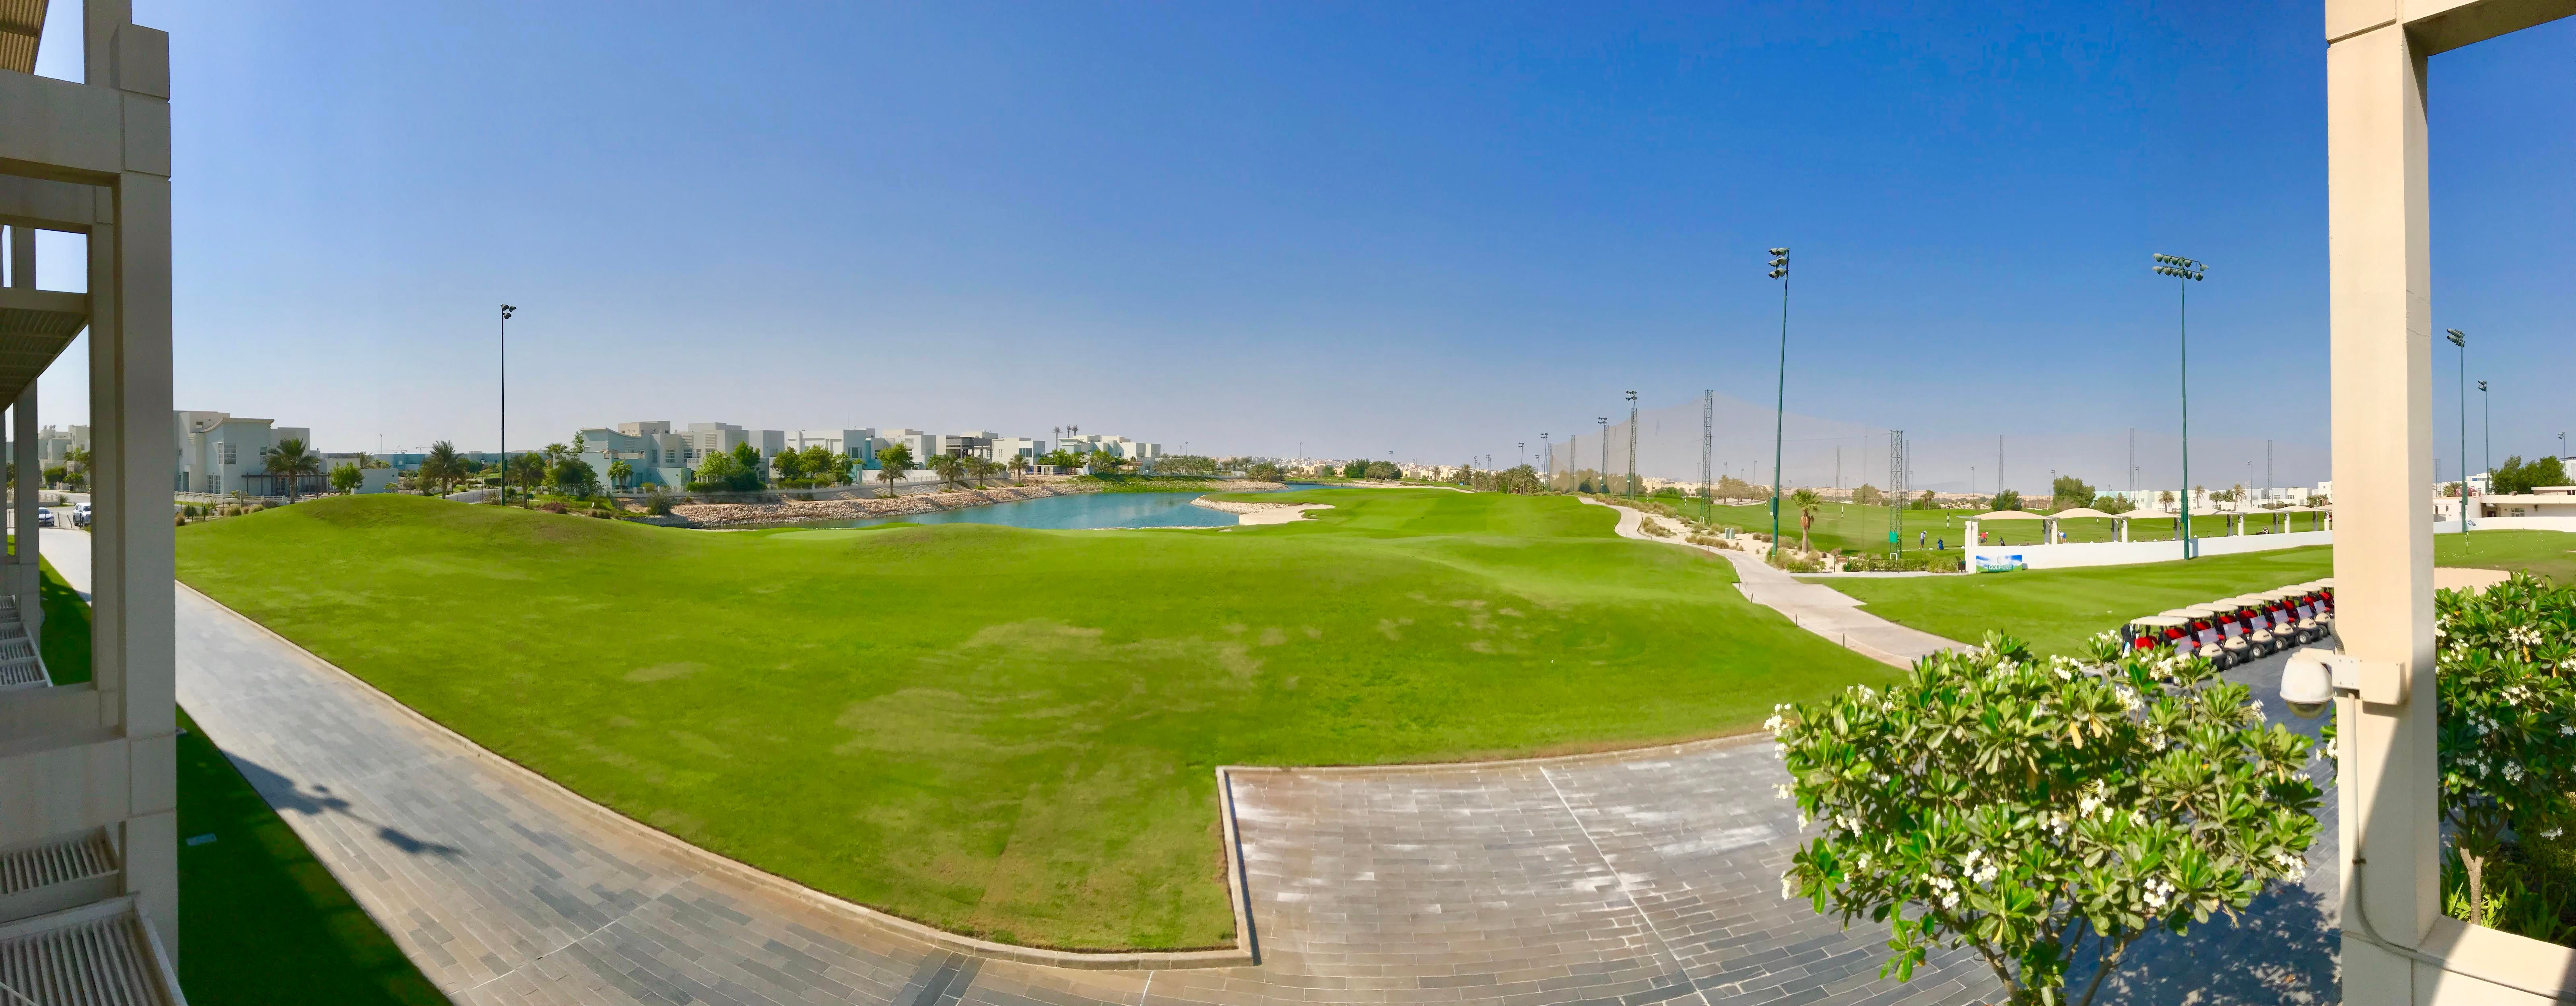 A golf course in Bahrain.